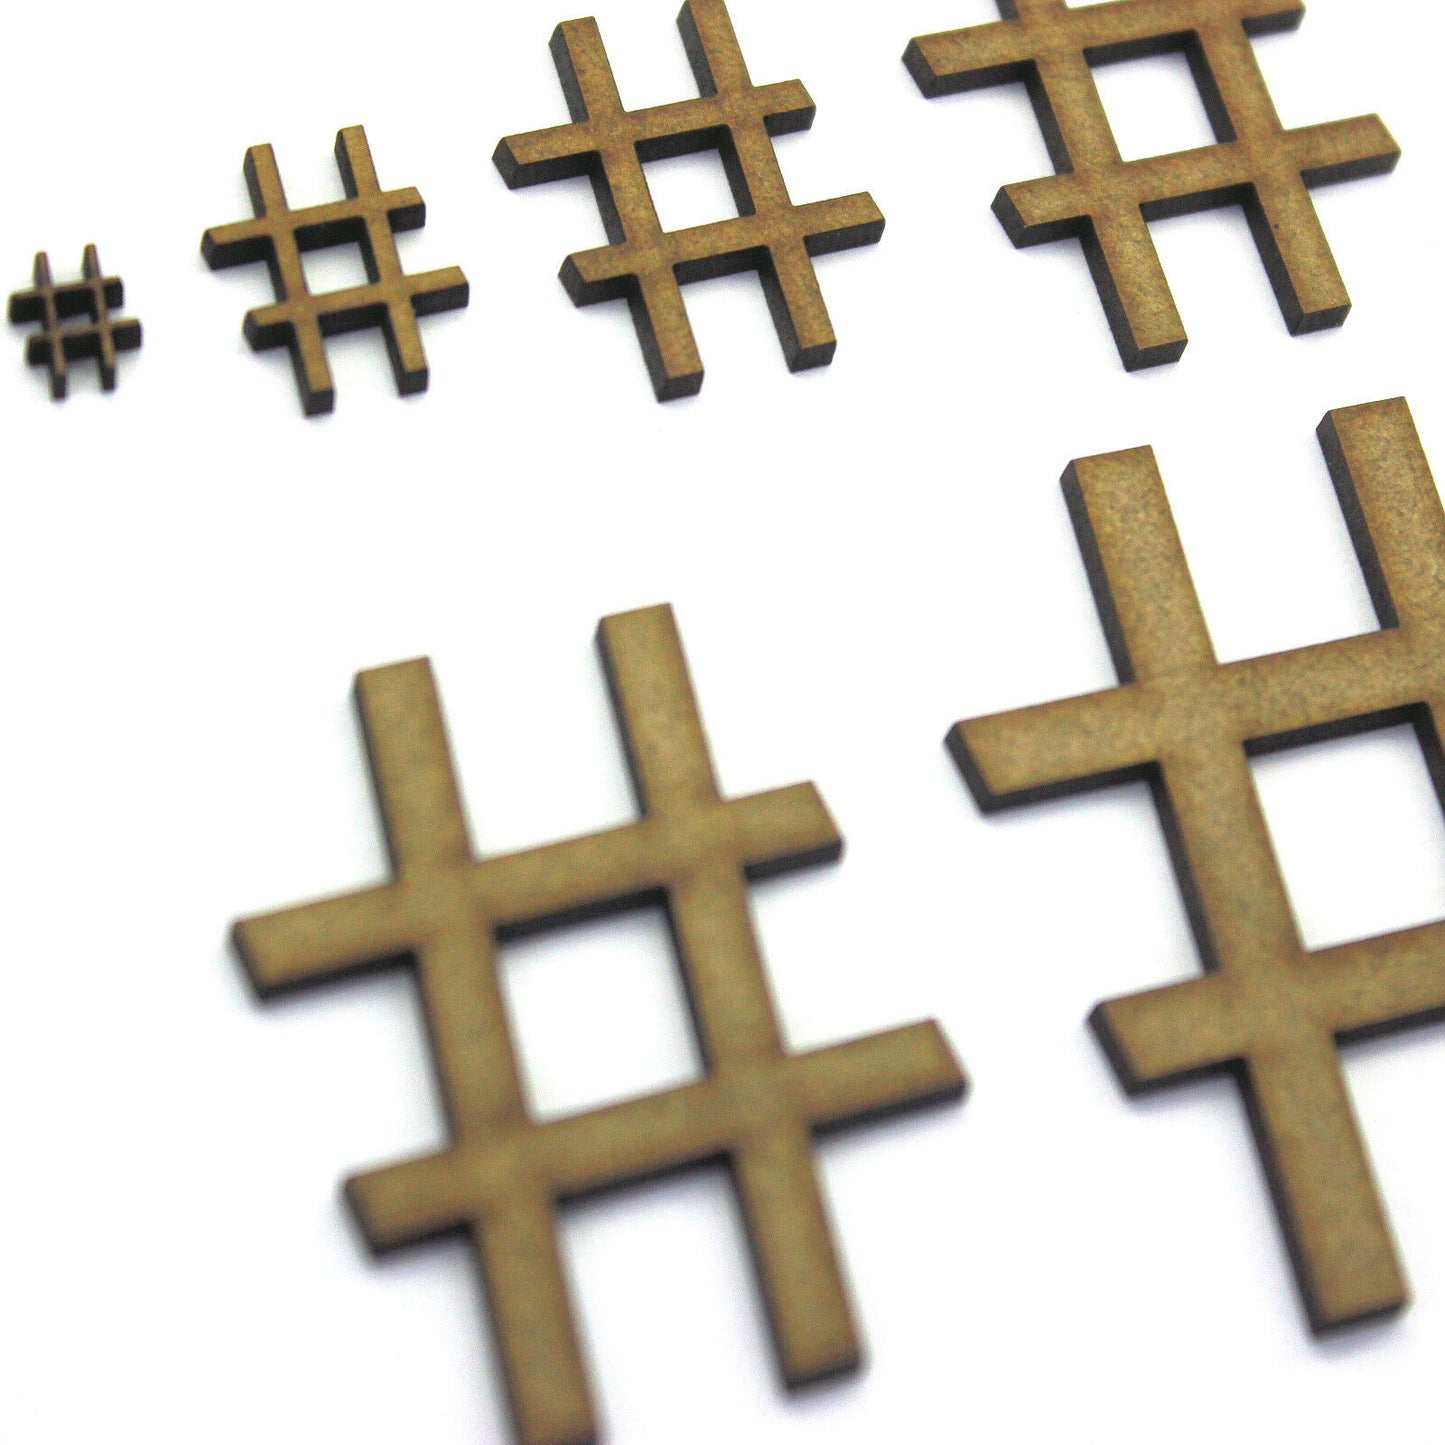 Hashtag Symbol Craft Shapes, Embellishments, Decorations, 2mm MDF. Hash Number #